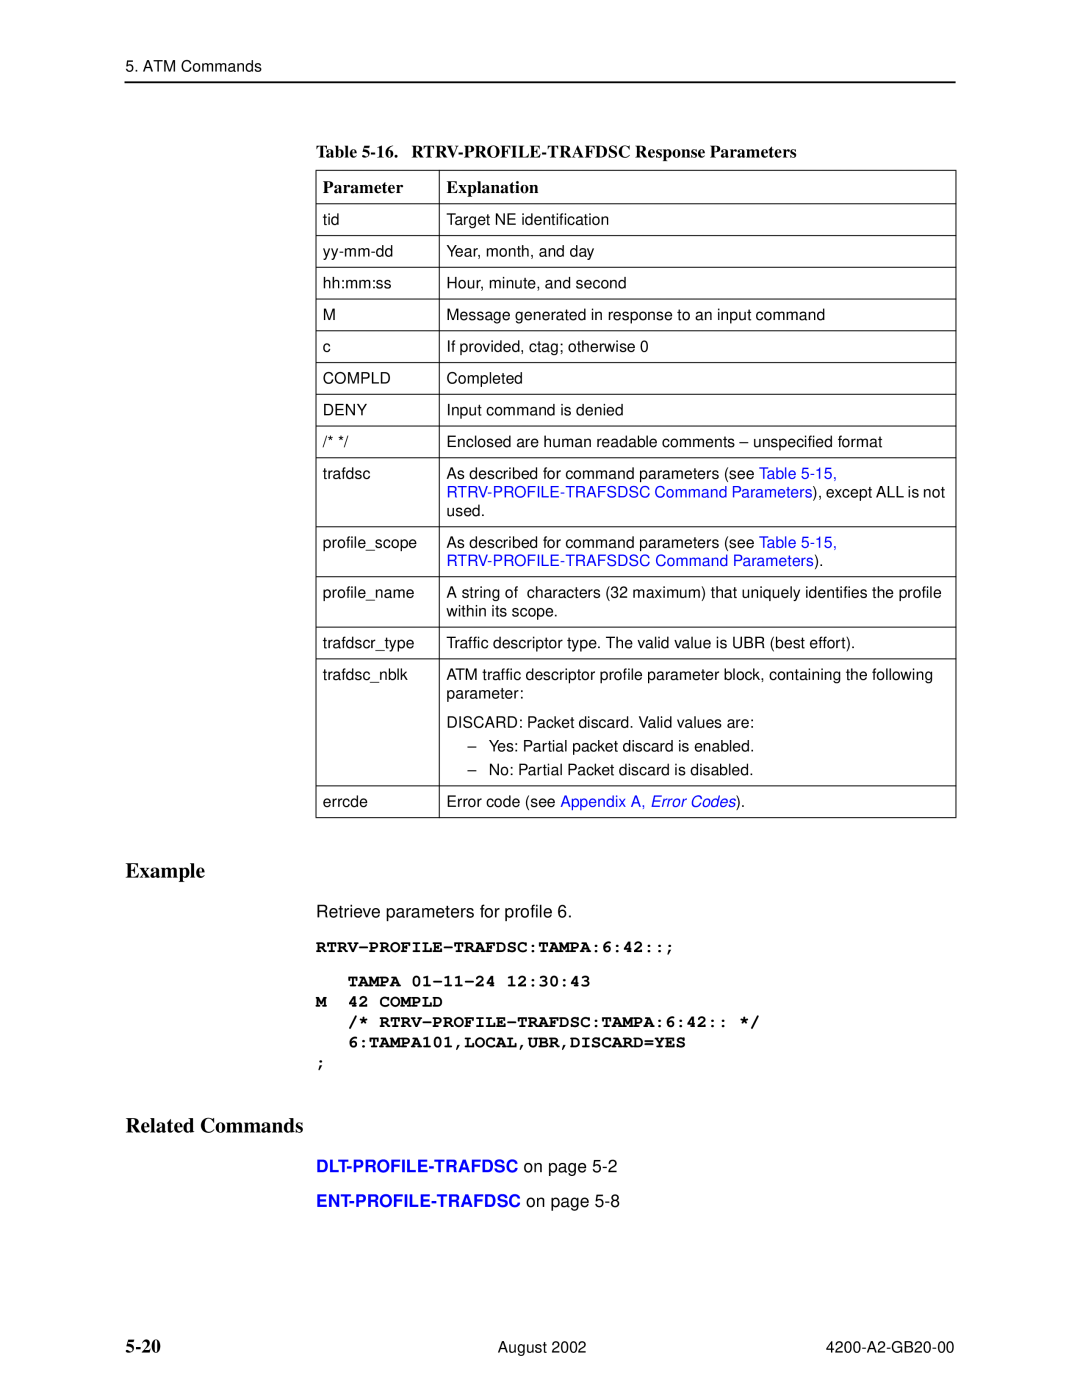 Paradyne 4200 5-20, 16. RTRV-PROFILE-TRAFDSC Response Parameters, DLT-PROFILE-TRAFDSC on page ENT-PROFILE-TRAFDSC on page 